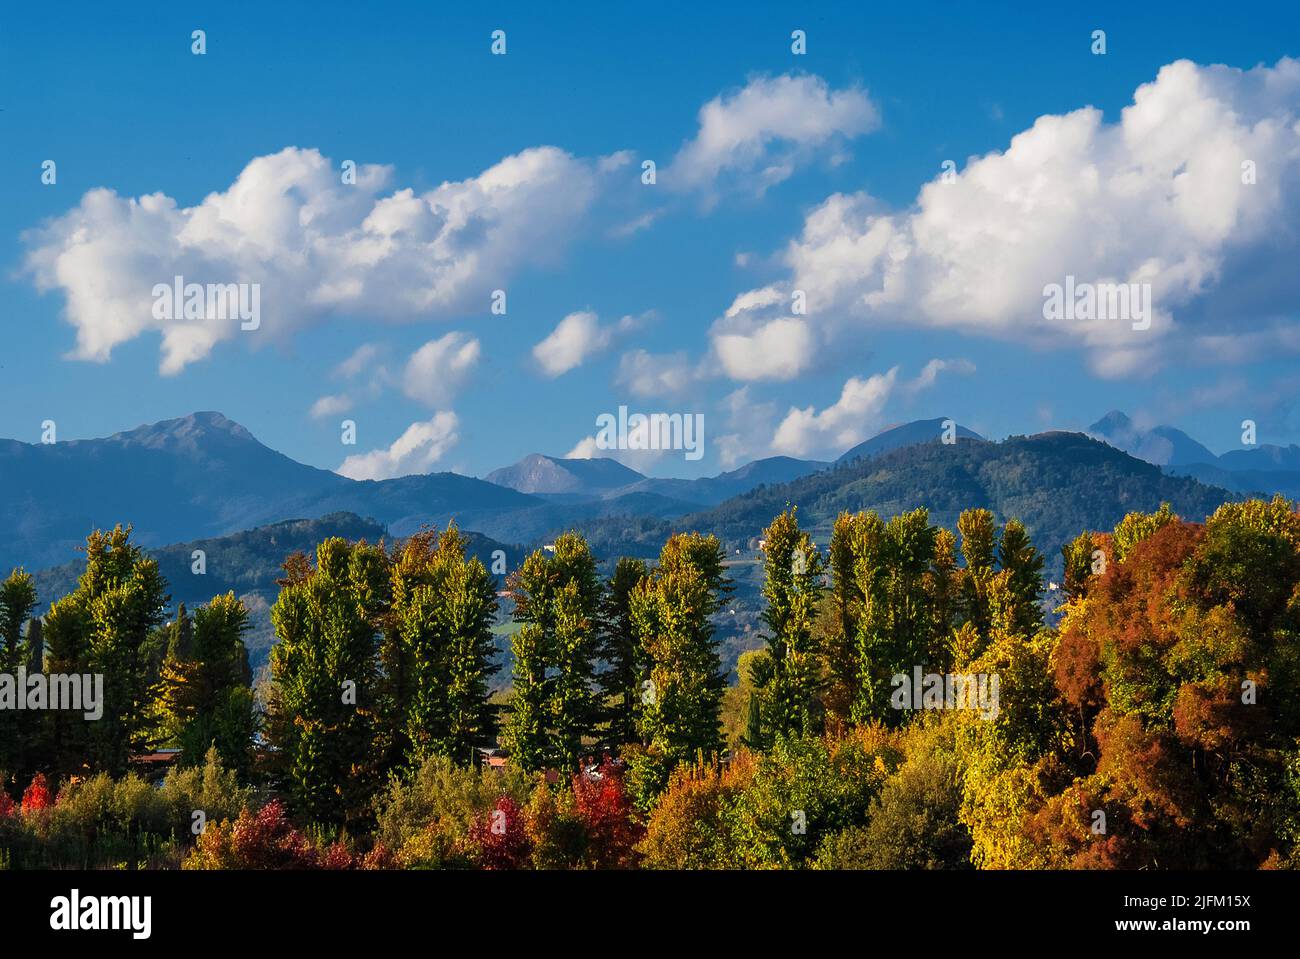 Apennine mountain range near Lucca in Italy, with autumn foliage Stock Photo